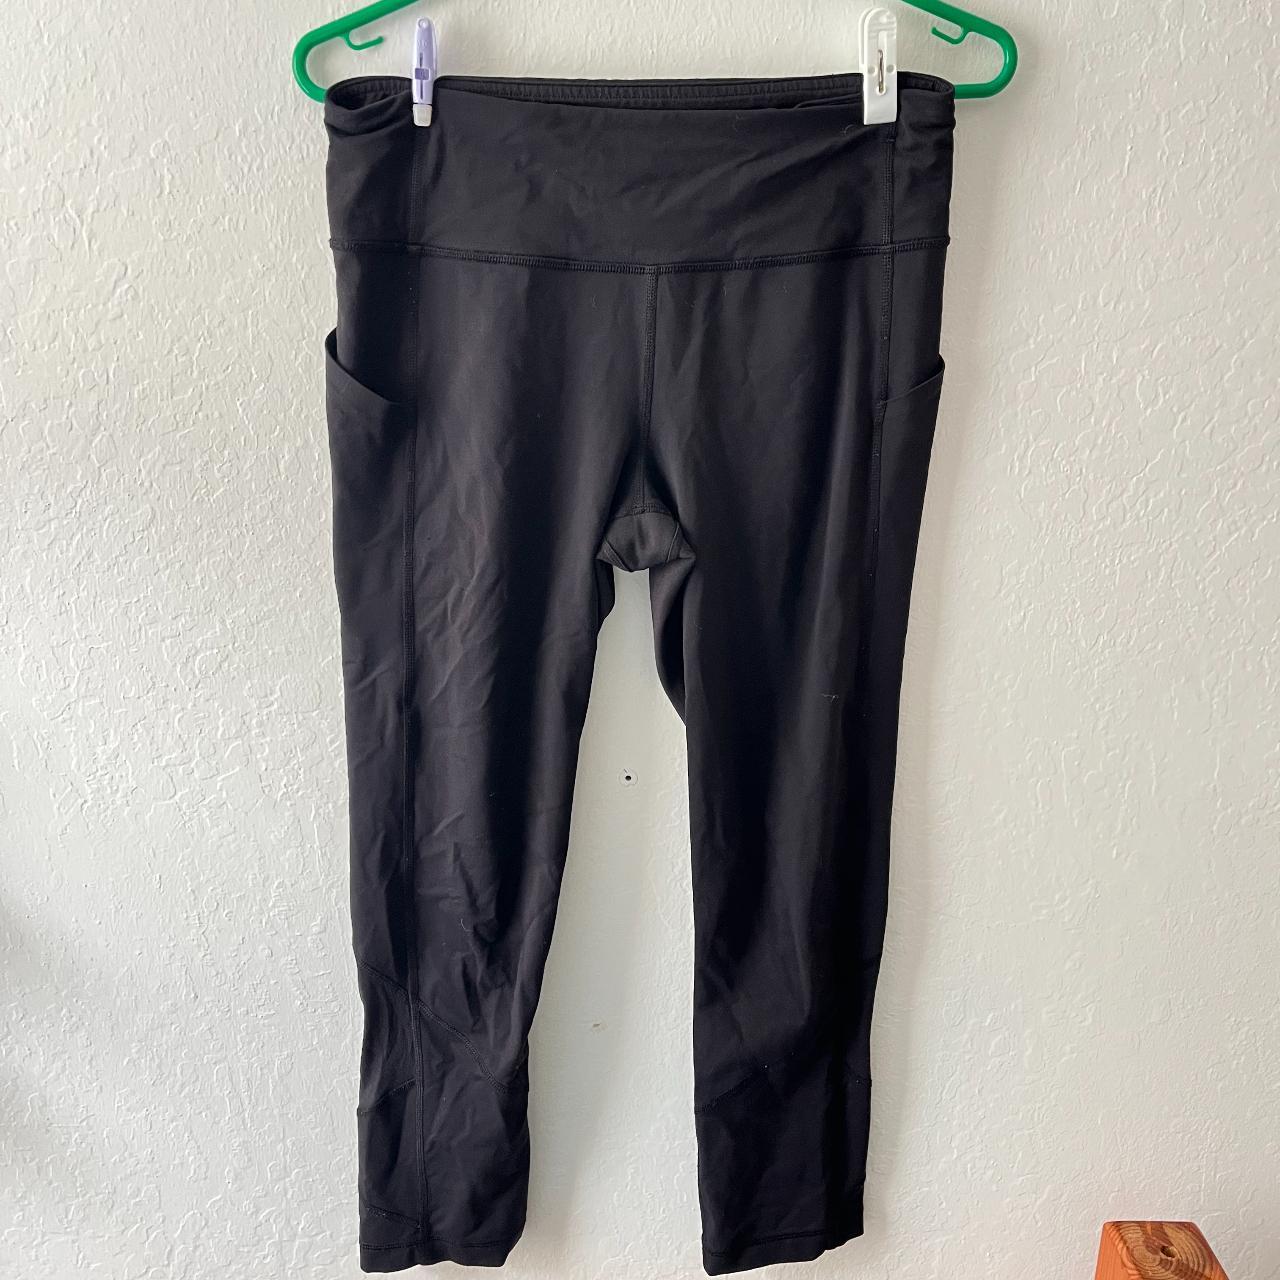 Lululemon semi crop black leggings size 6 Size 6, - Depop